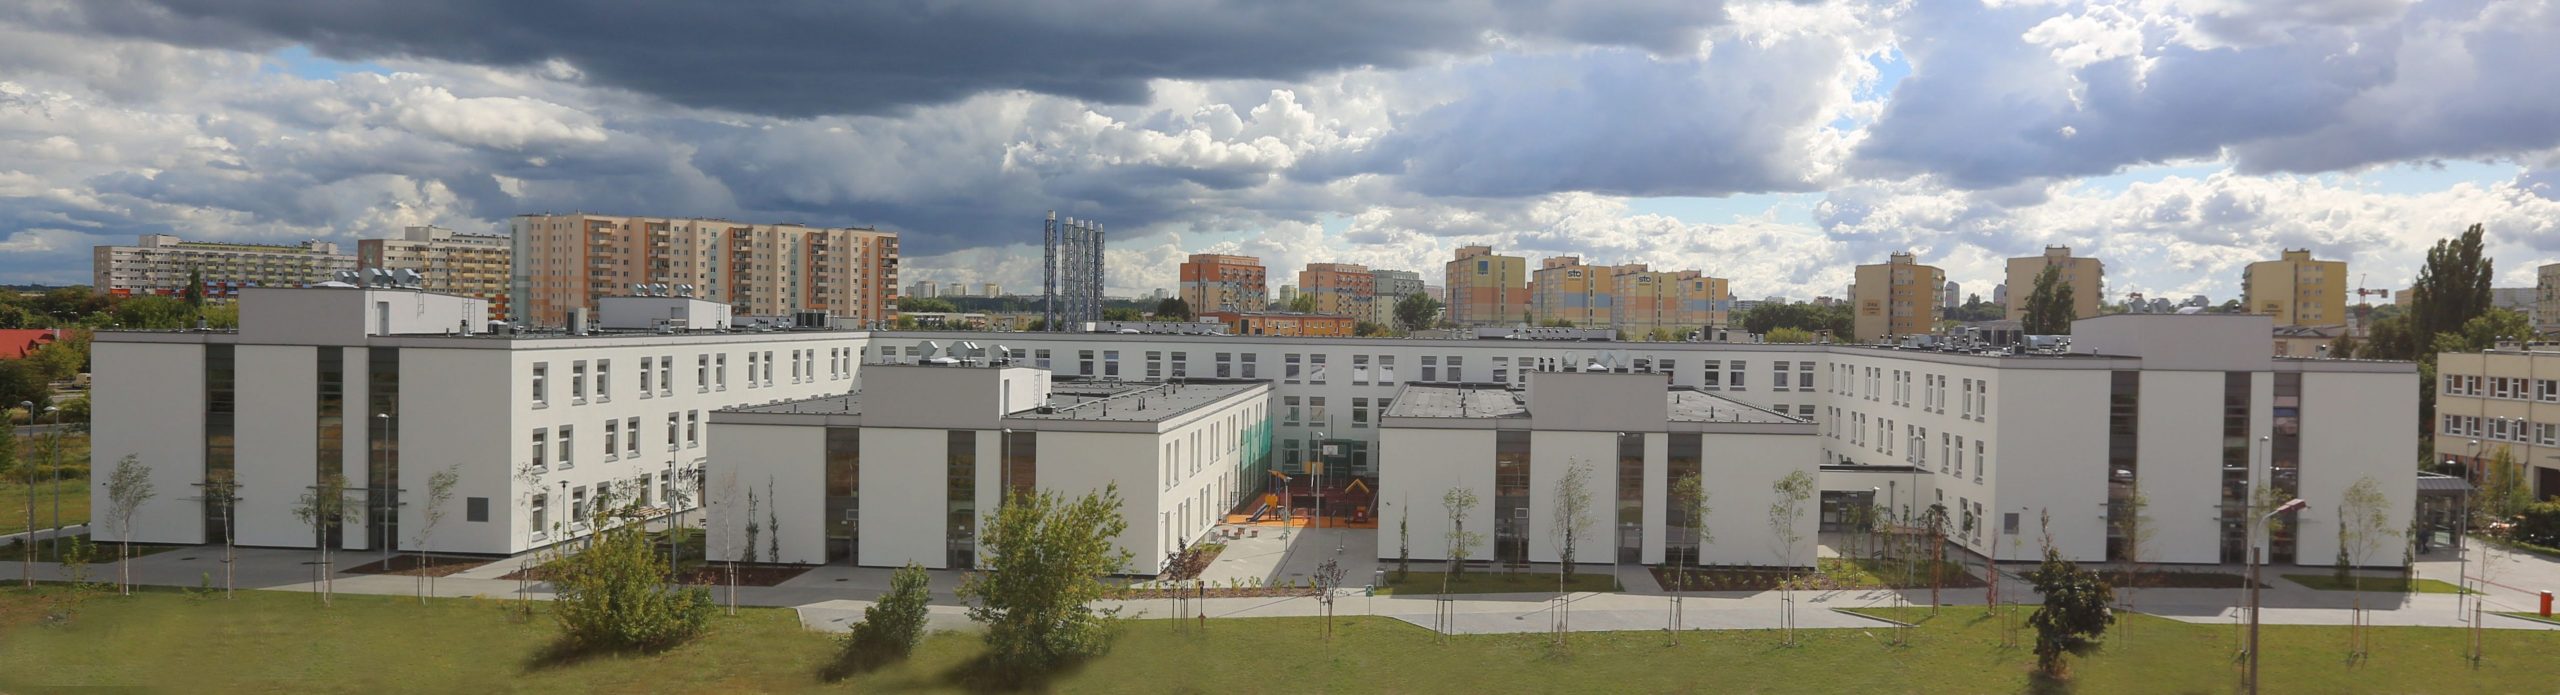 of the new hospital facility of the University Hospital no. 1 in Bydgoszcz